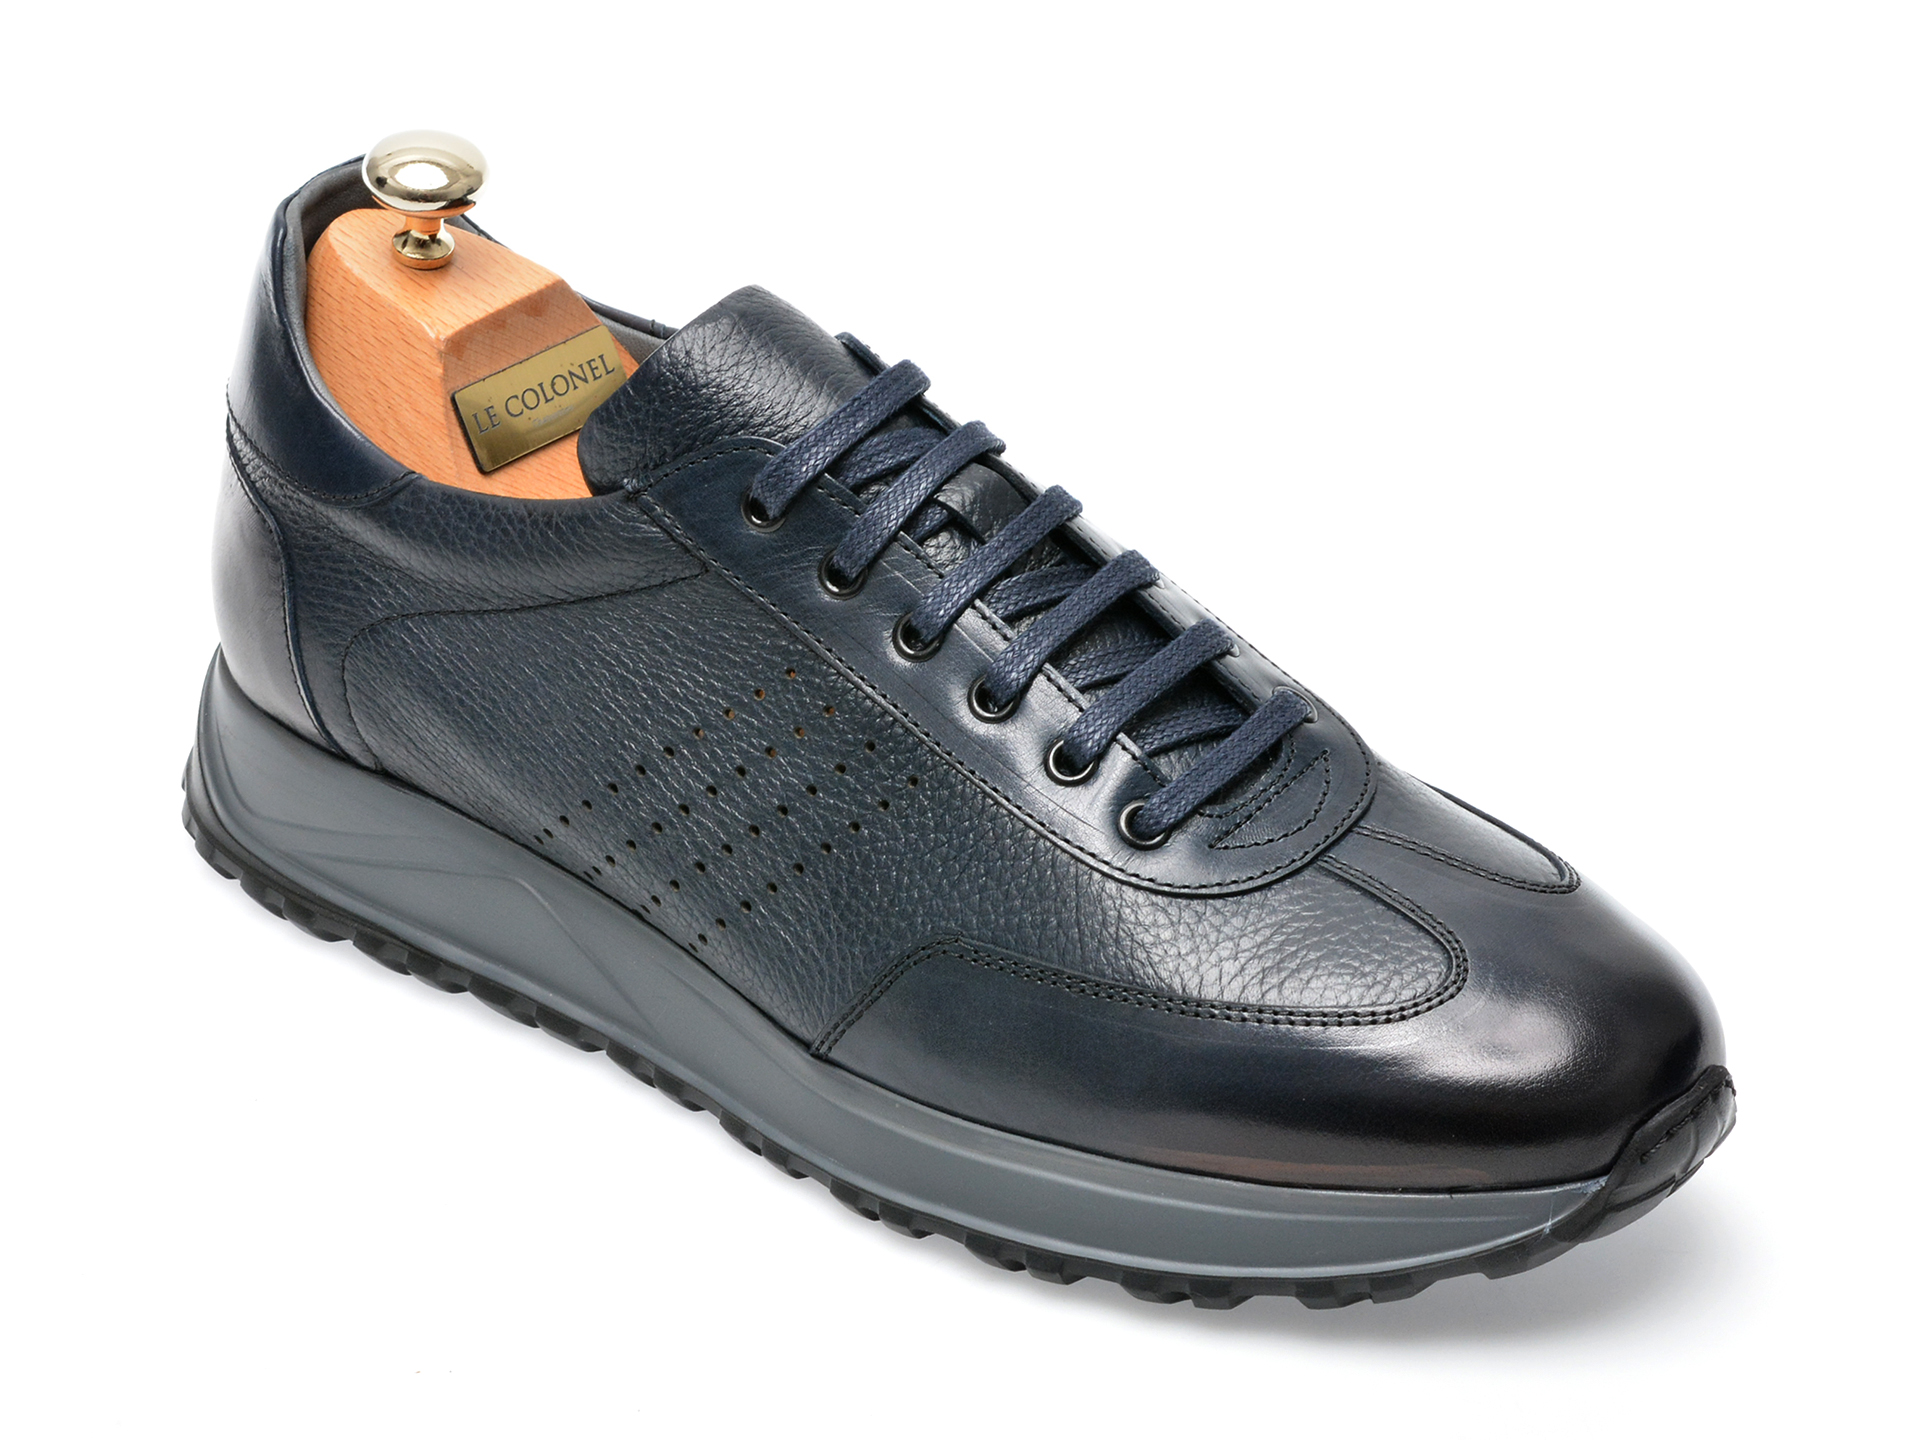 Pantofi LE COLONEL bleumarin, 62818, din piele naturala Le Colonel Le Colonel